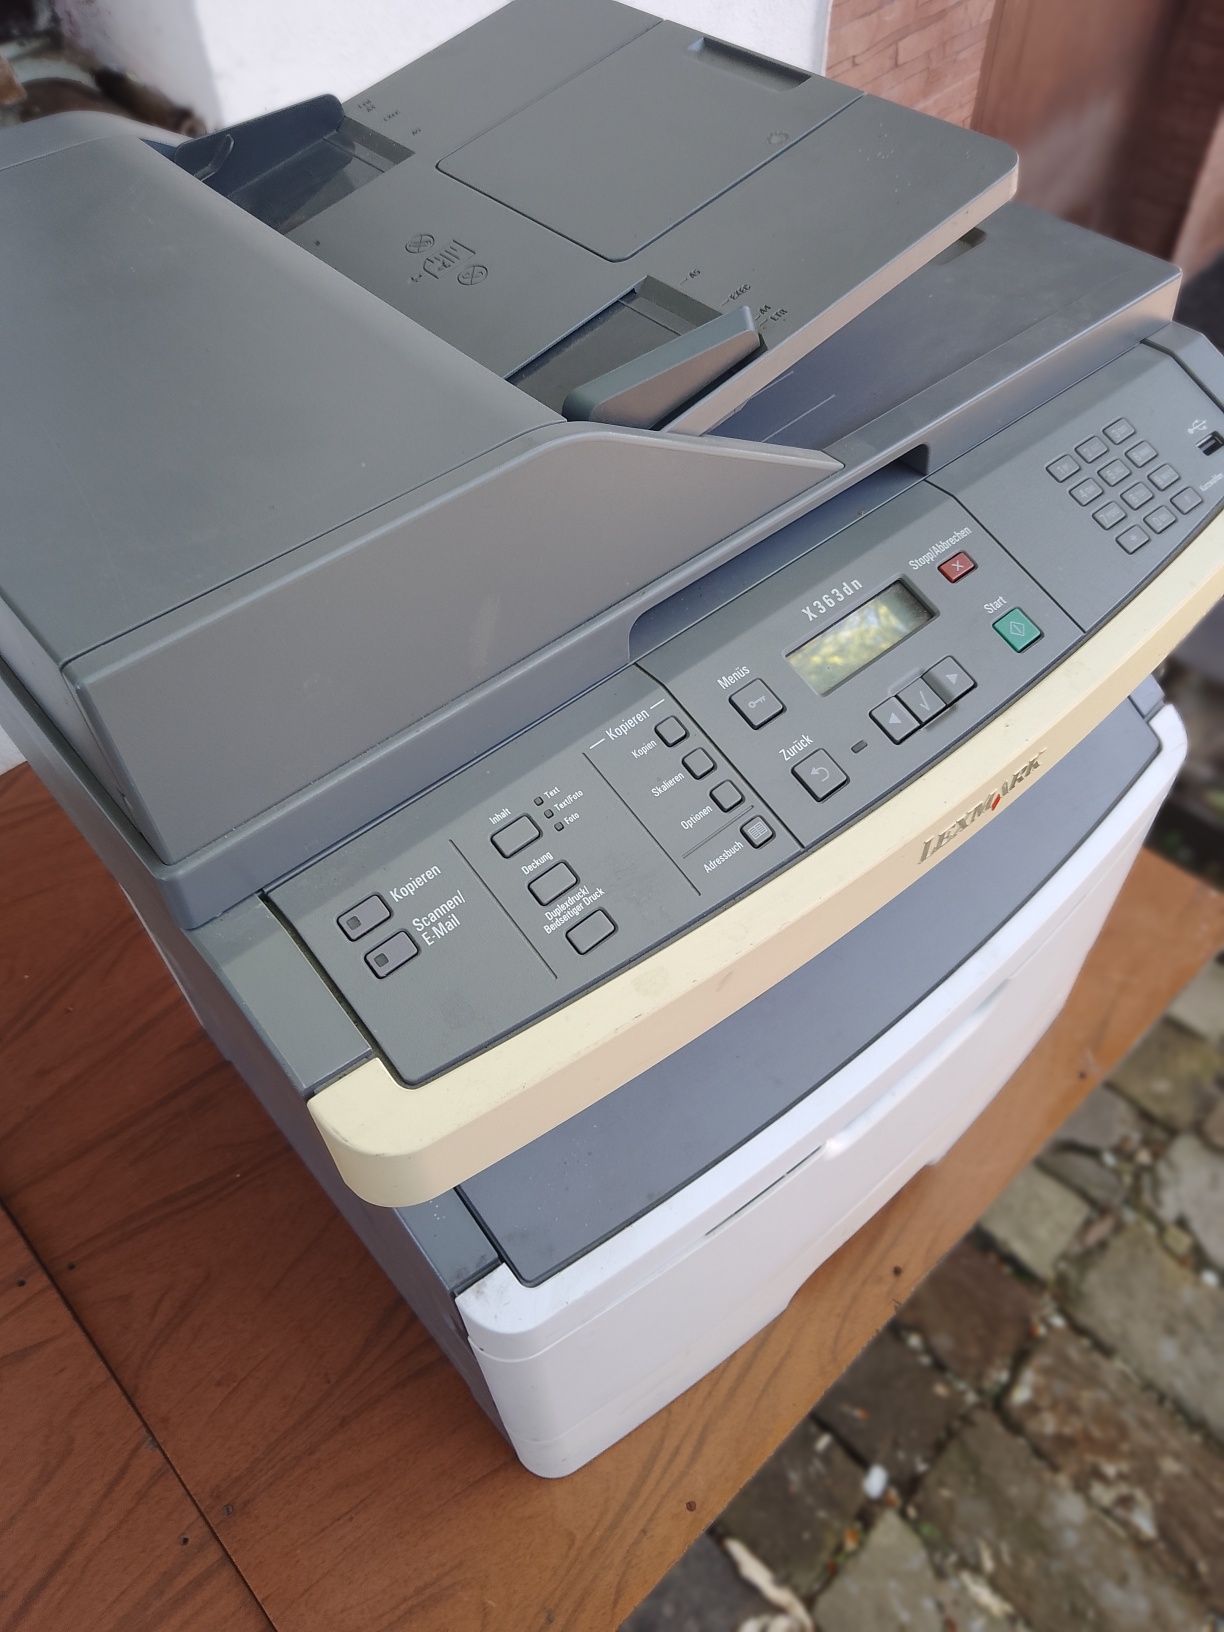 Ксерокс сканер принтер МФУ Lexmark x363dn